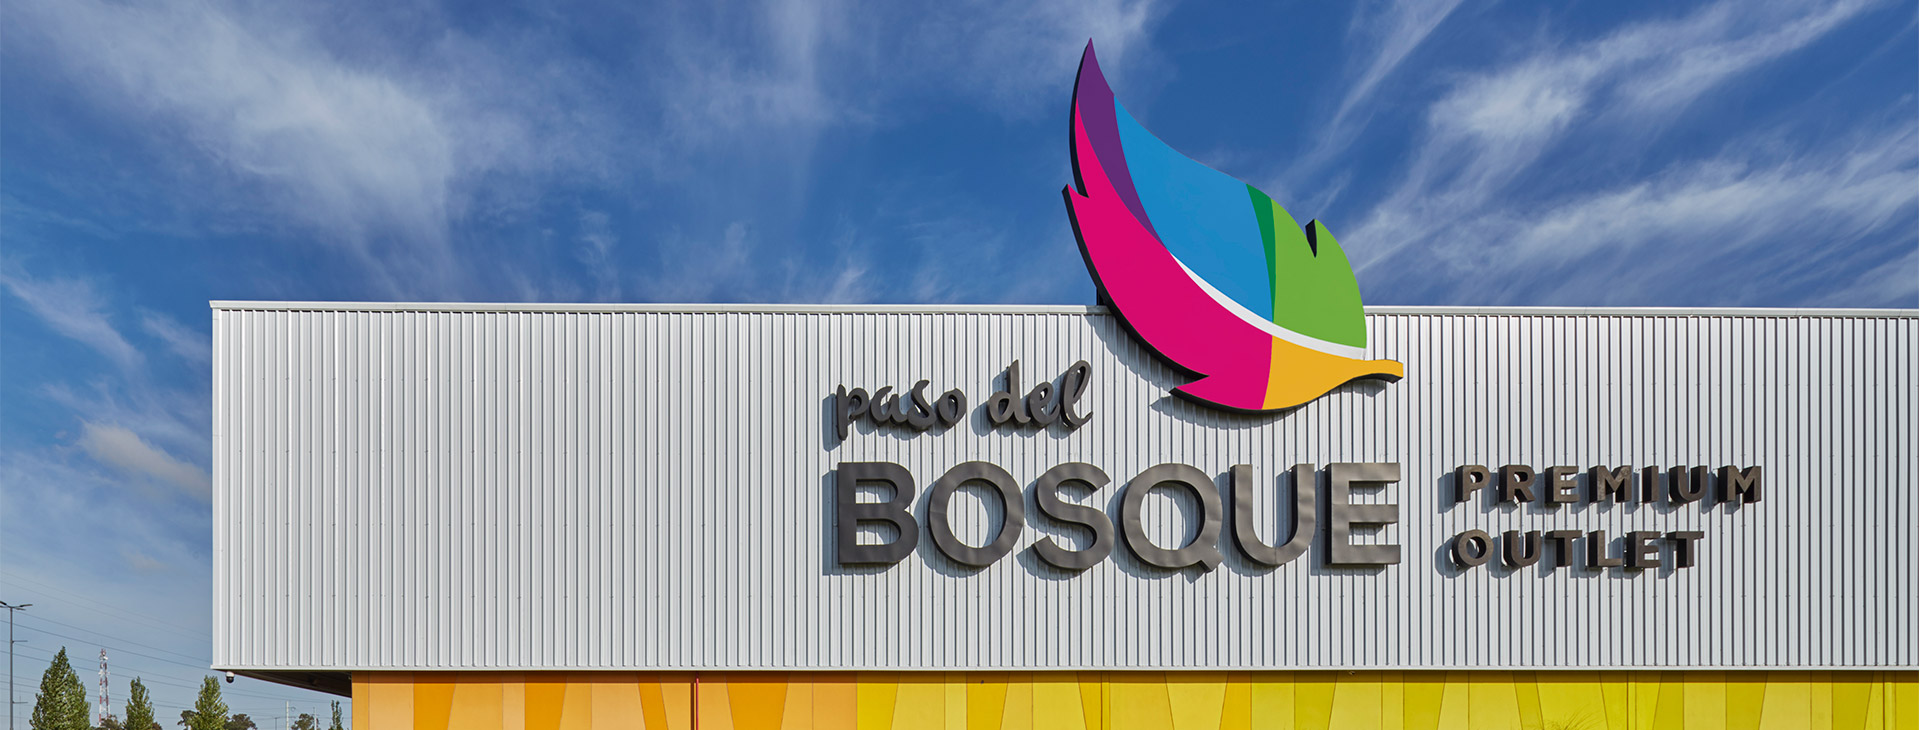 Paso del Bosque Outlet Premium Rosario - Renders